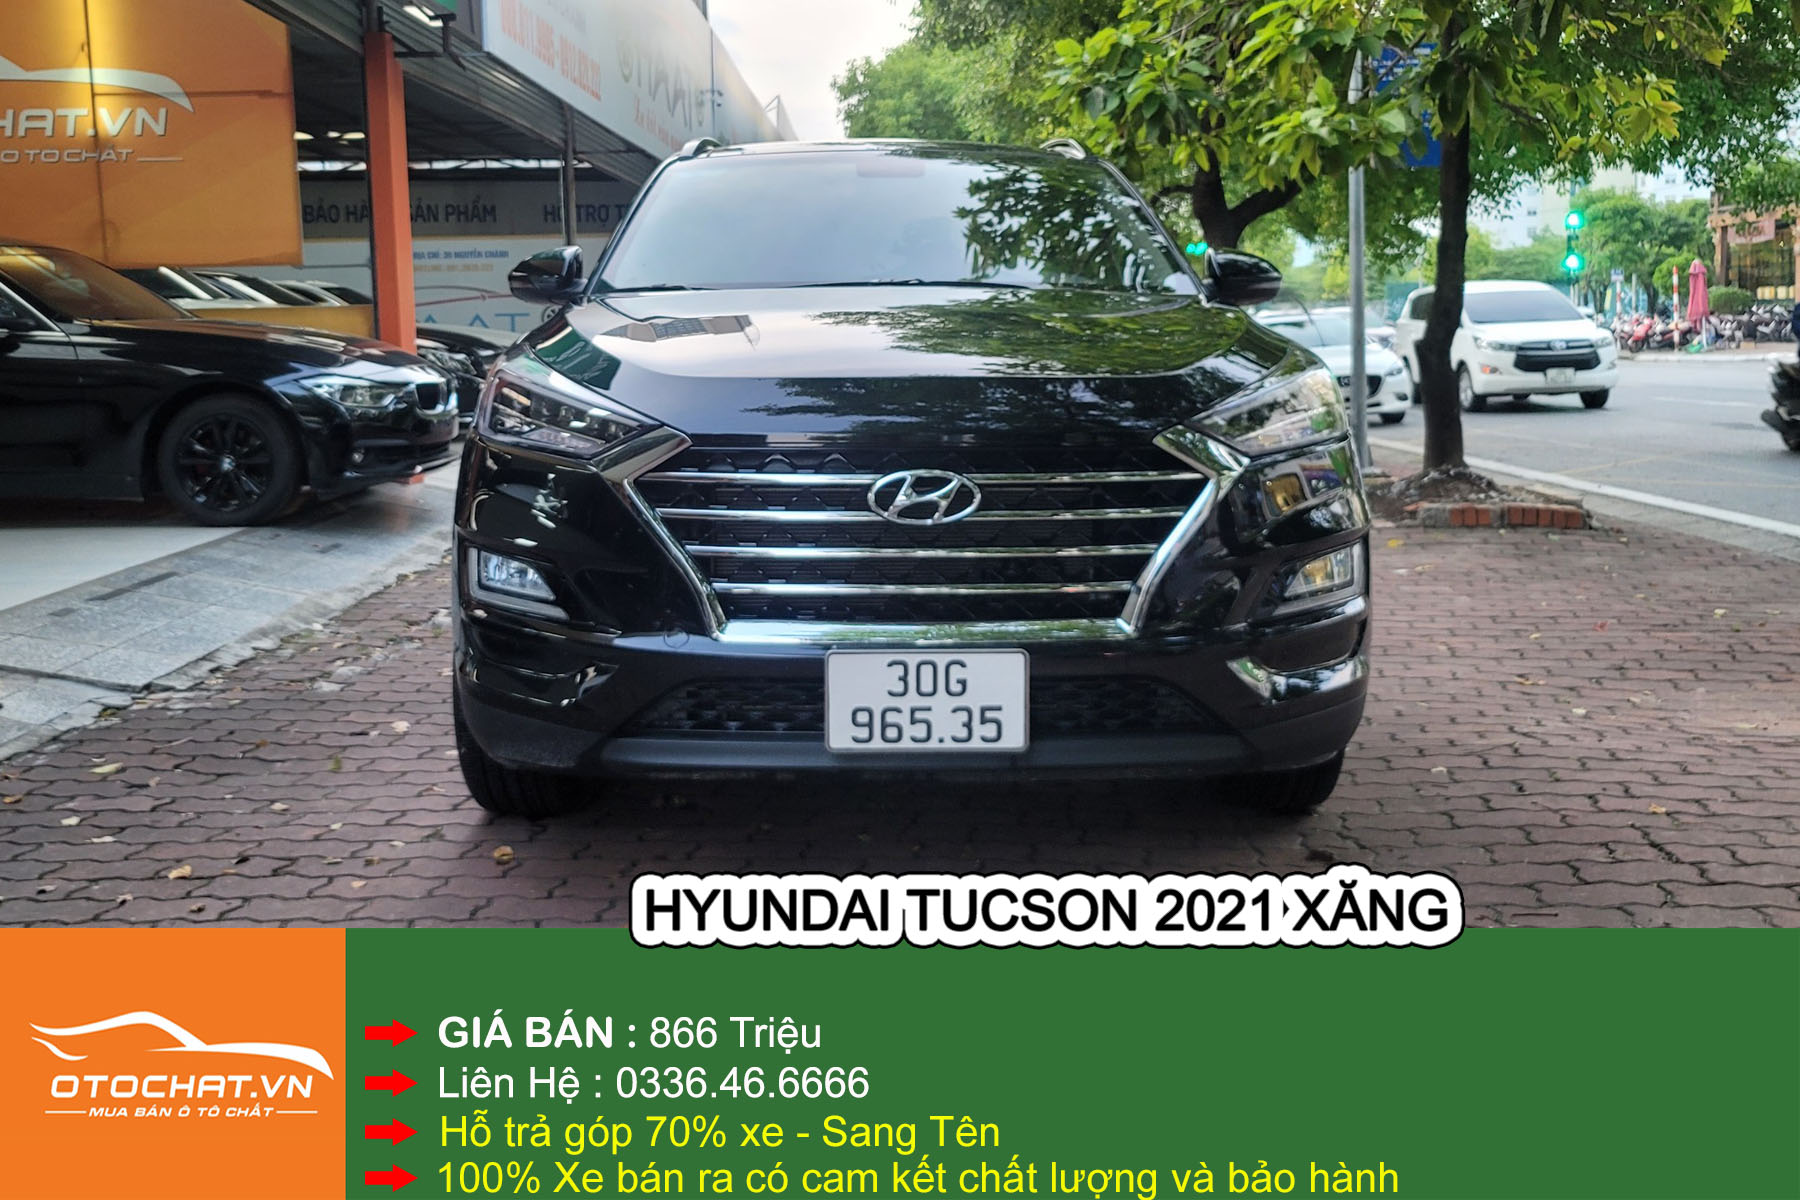 Hyundai Tucson full xăng 2021